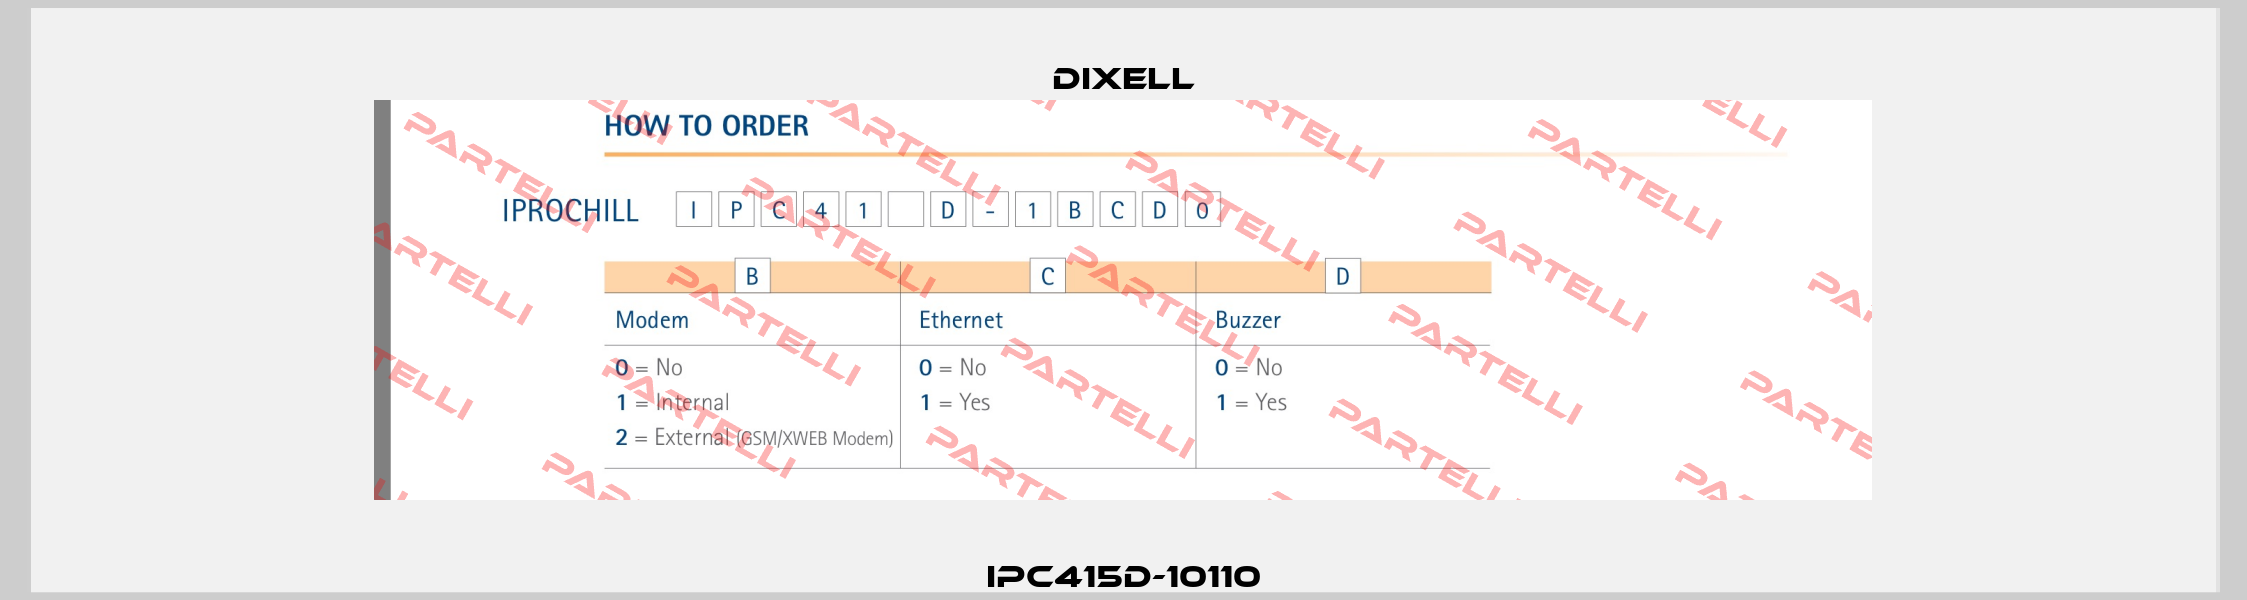 IPC415D-10110 Dixell